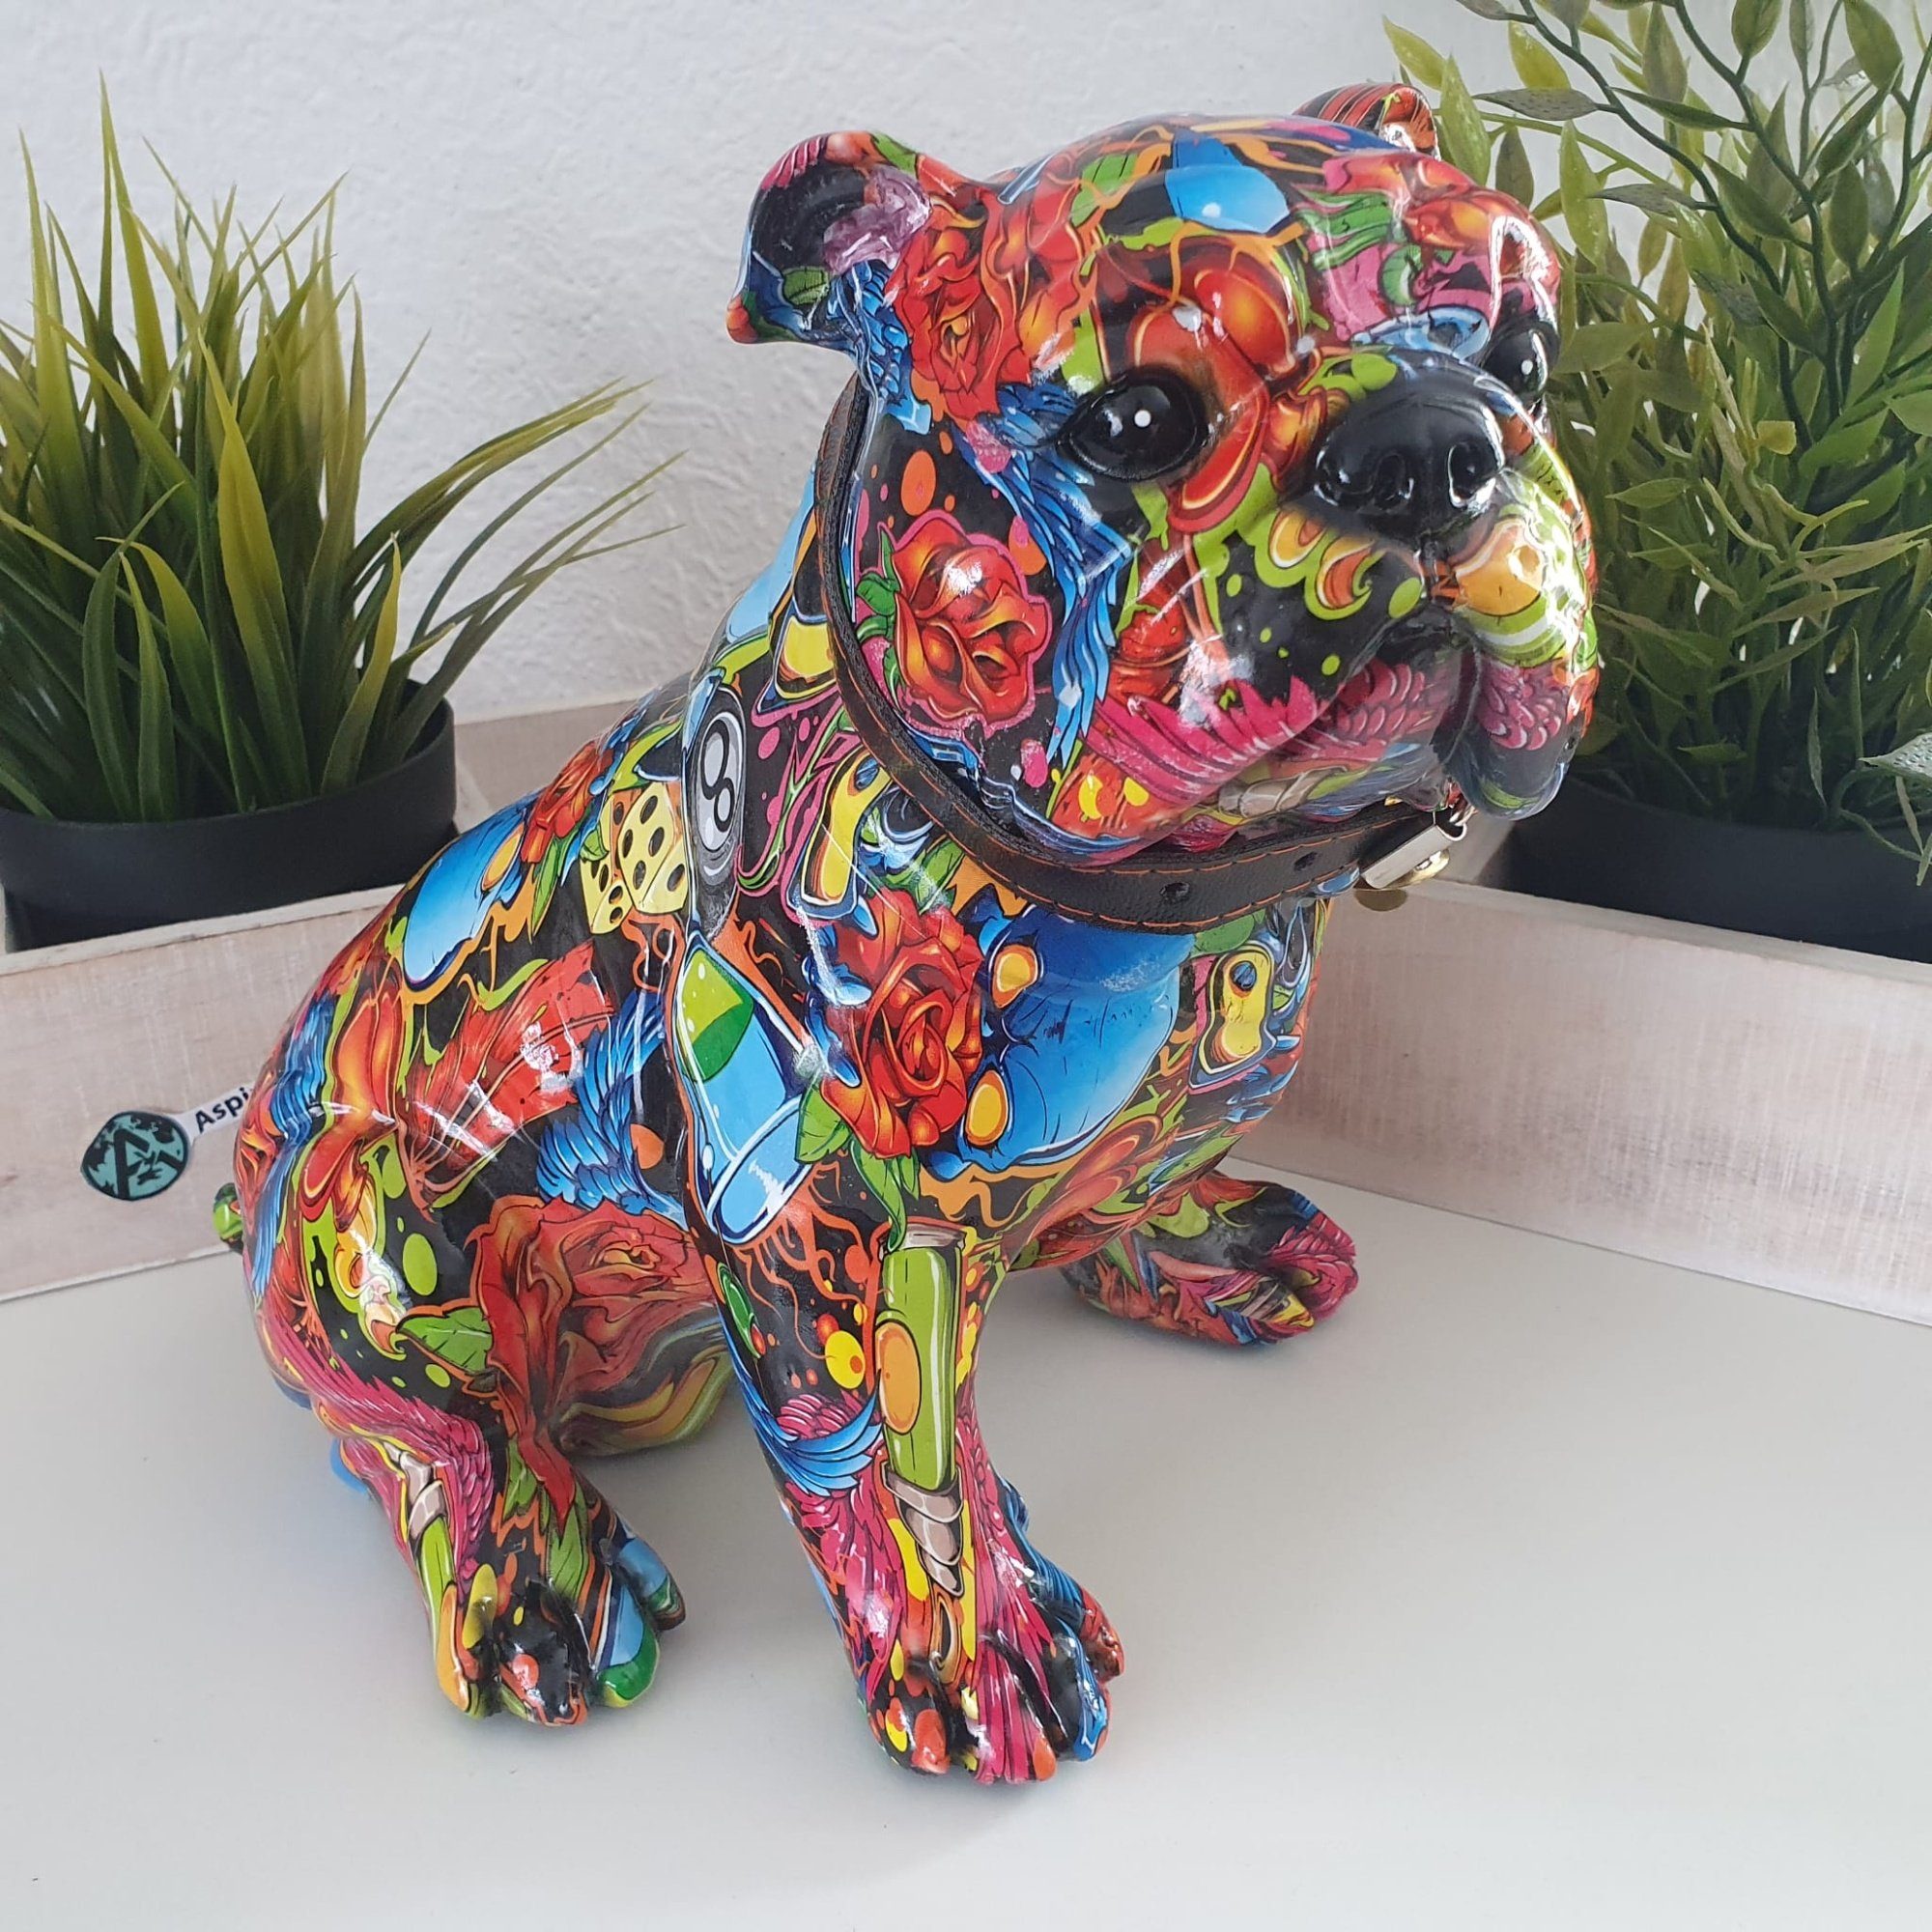 Aspinaworld Dekofigur Street Art Mops Hunde Figur Graffiti style 22 cm